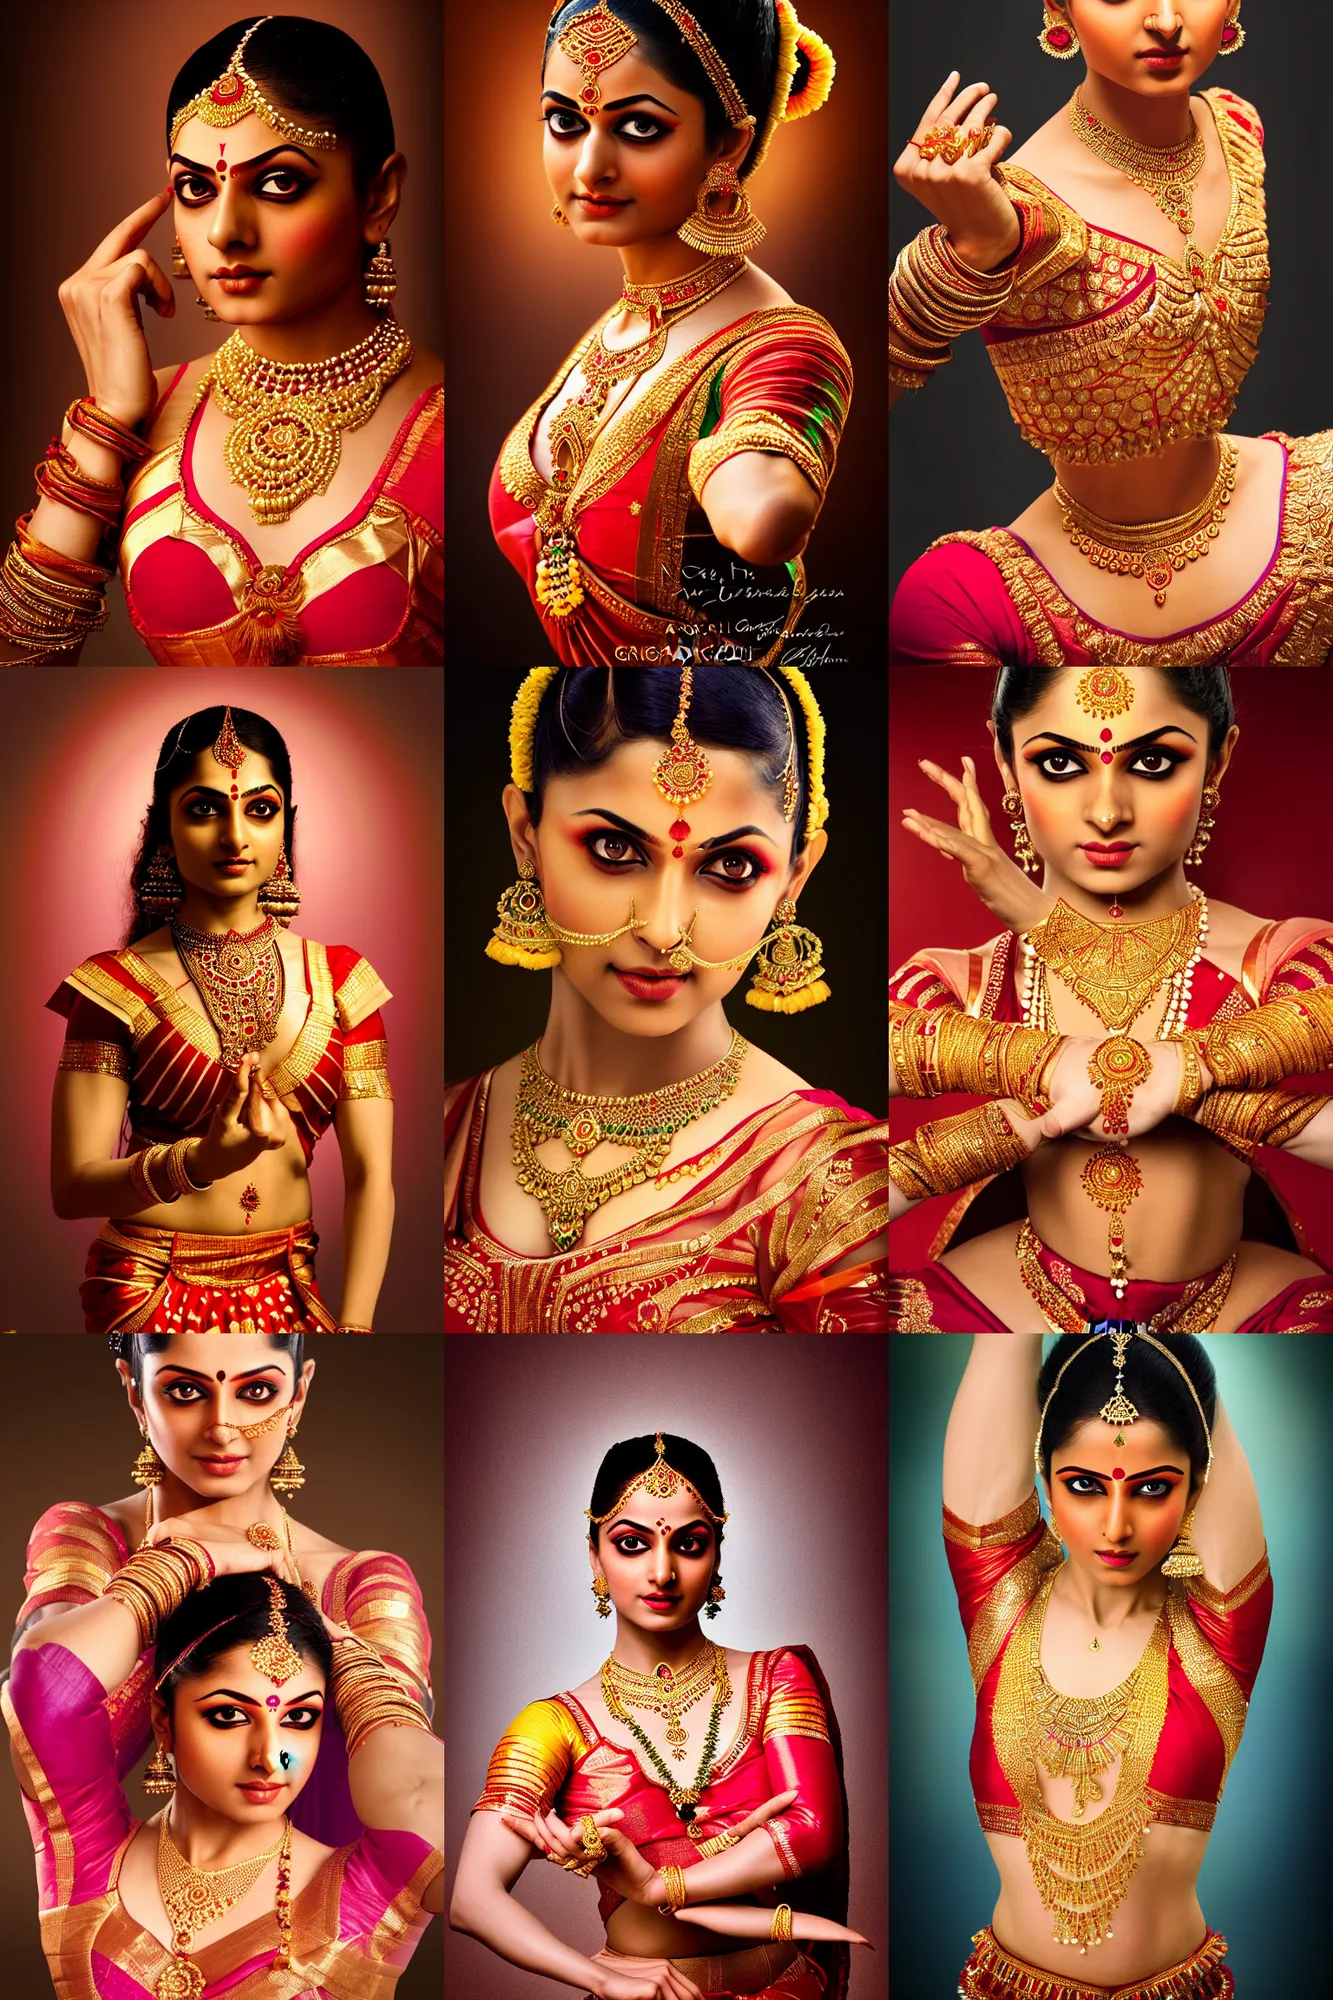 A Stunning Indian Classical Dancer